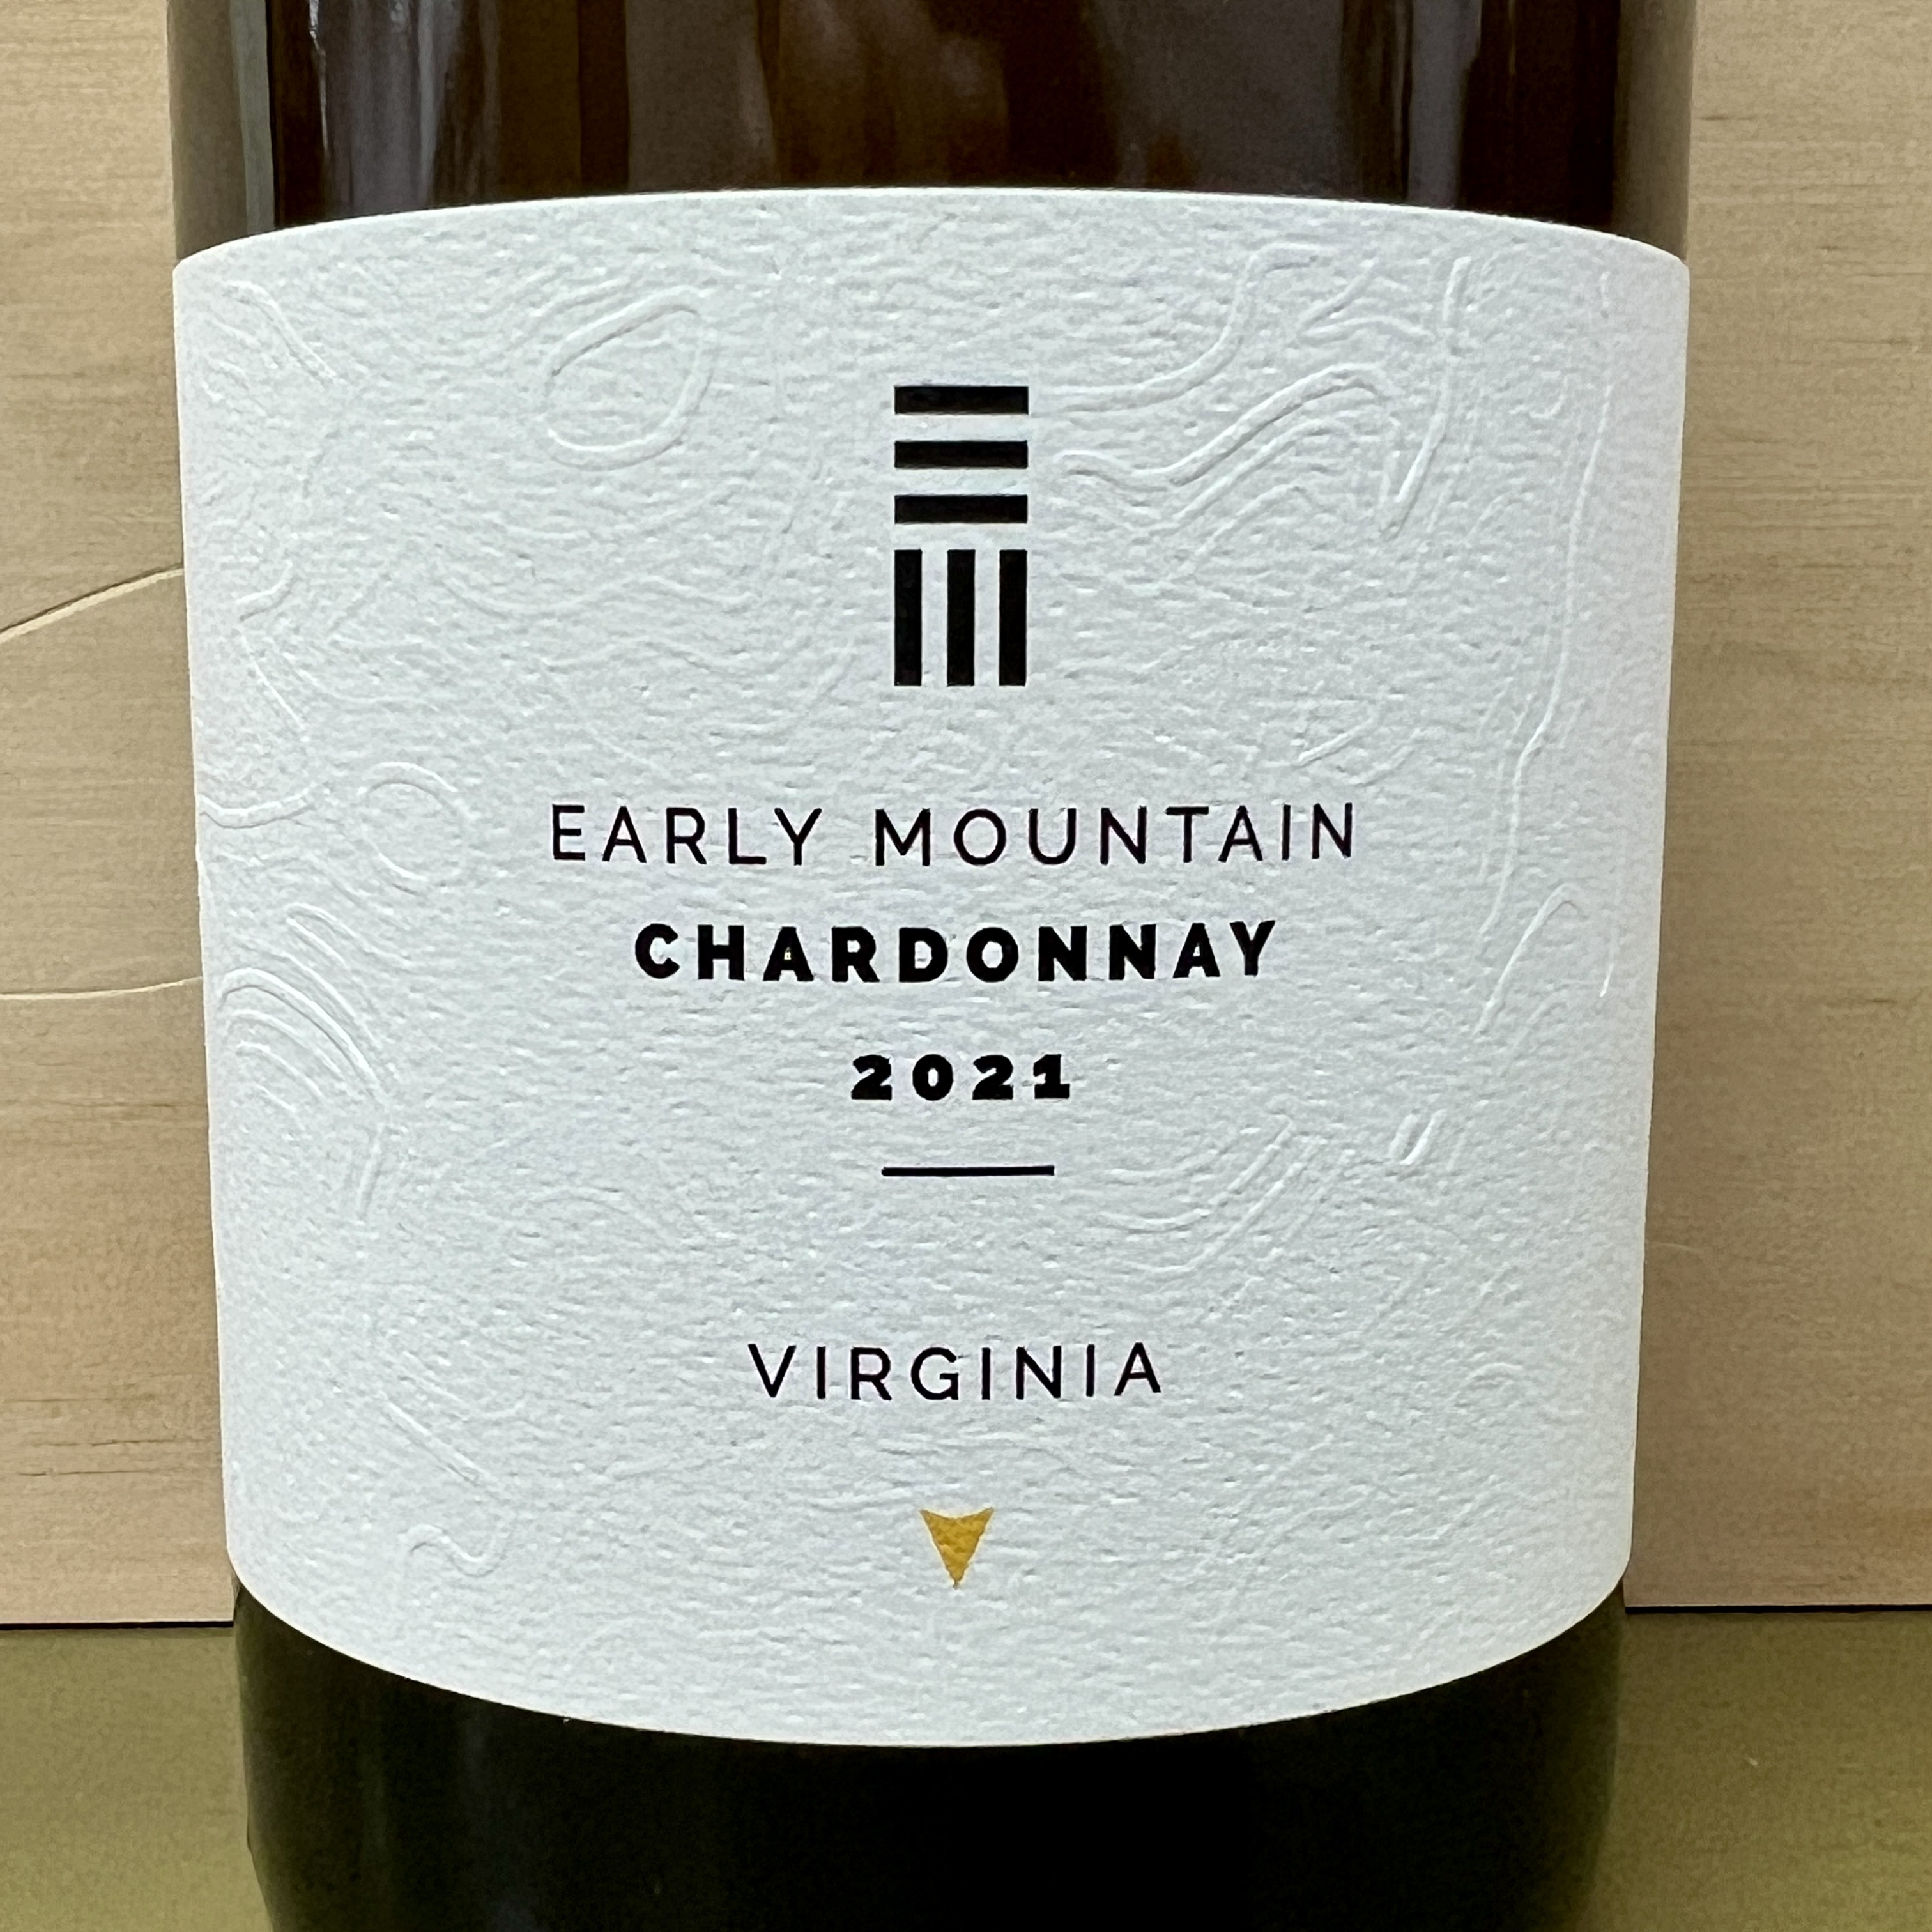 Early Mountain Chardonnay 2021